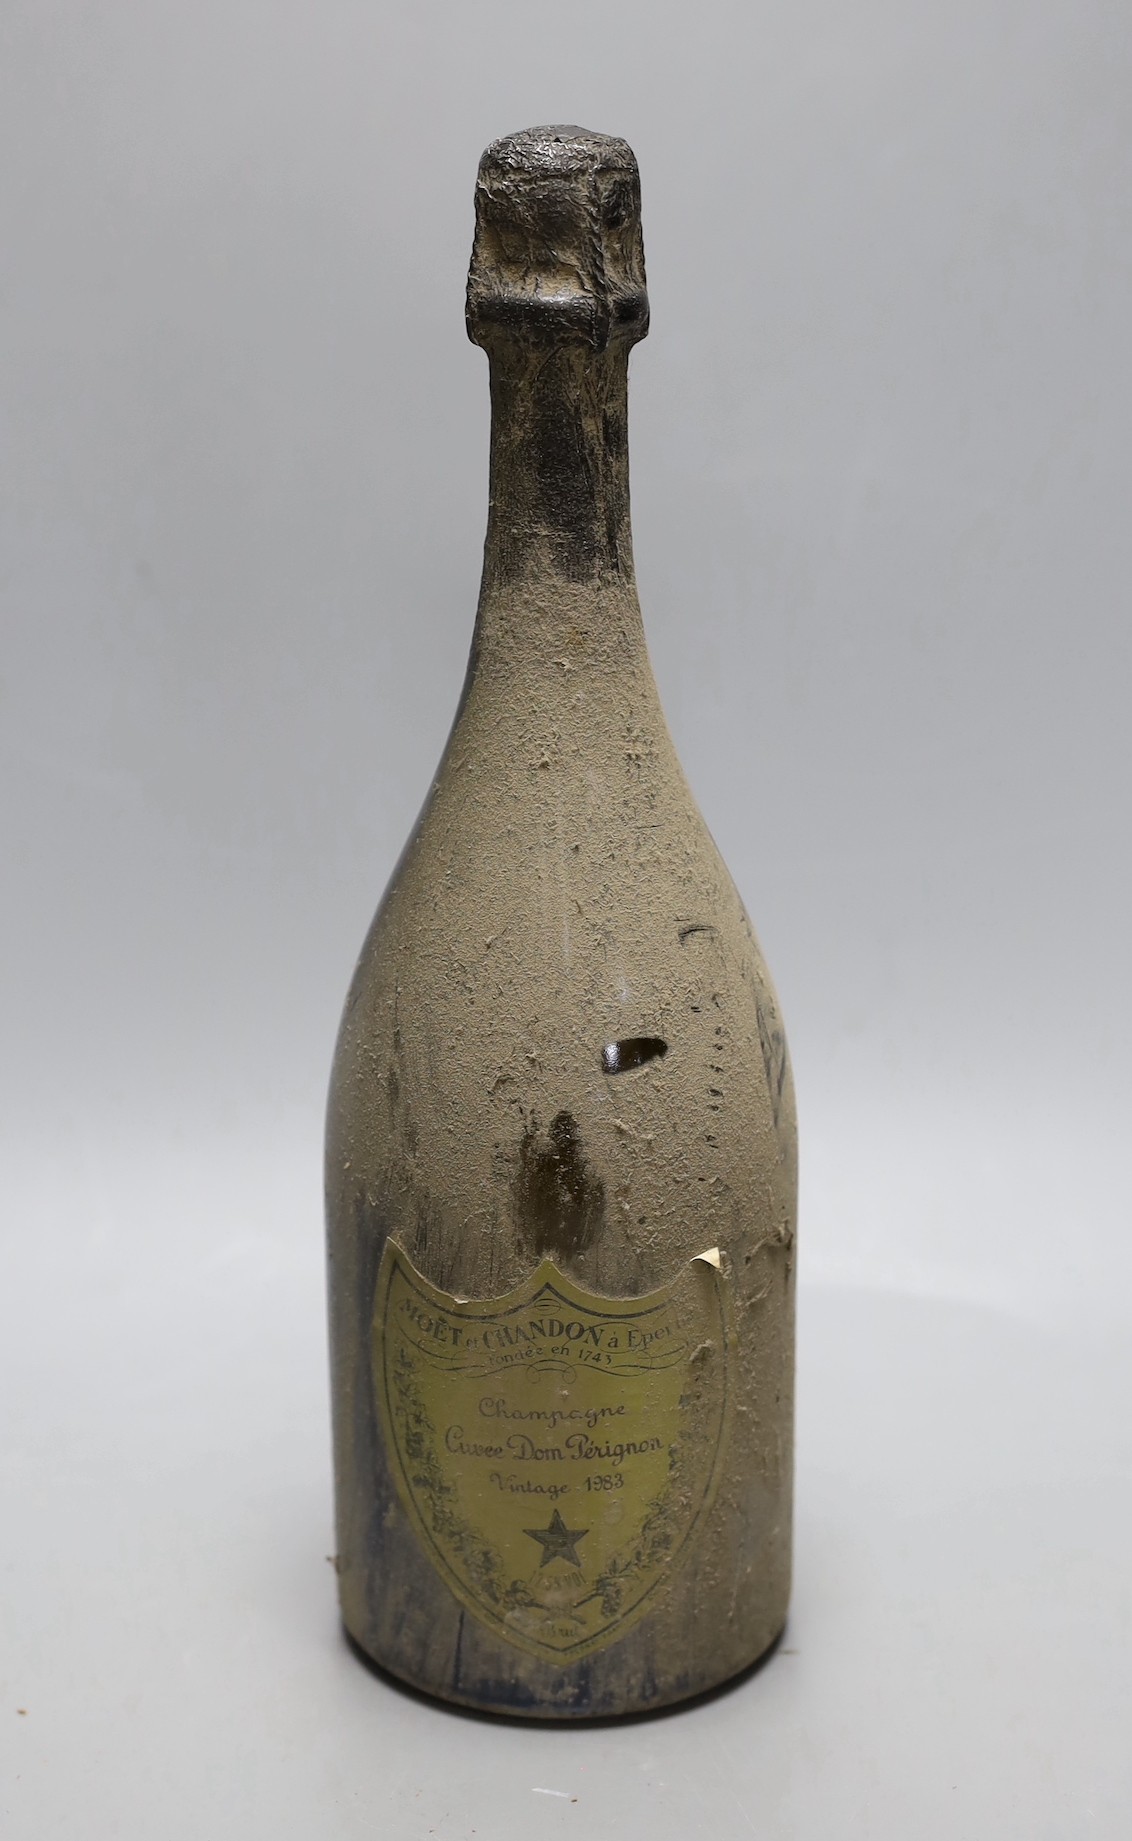 A bottle of Dom Perignon Vintage champagne, 1983